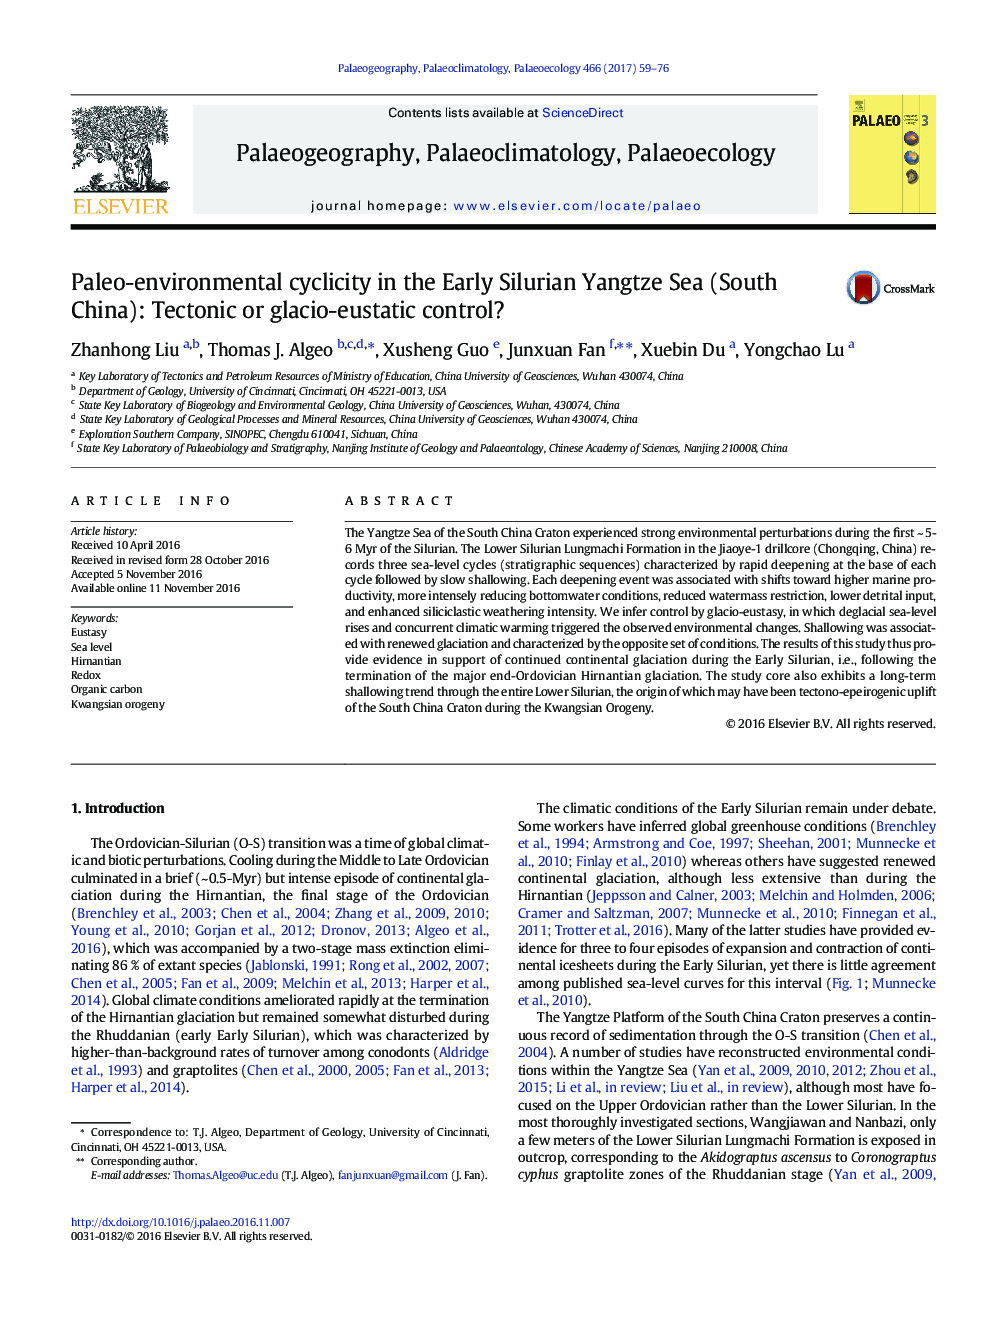 Paleo-environmental cyclicity in the Early Silurian Yangtze Sea (South China): Tectonic or glacio-eustatic control?